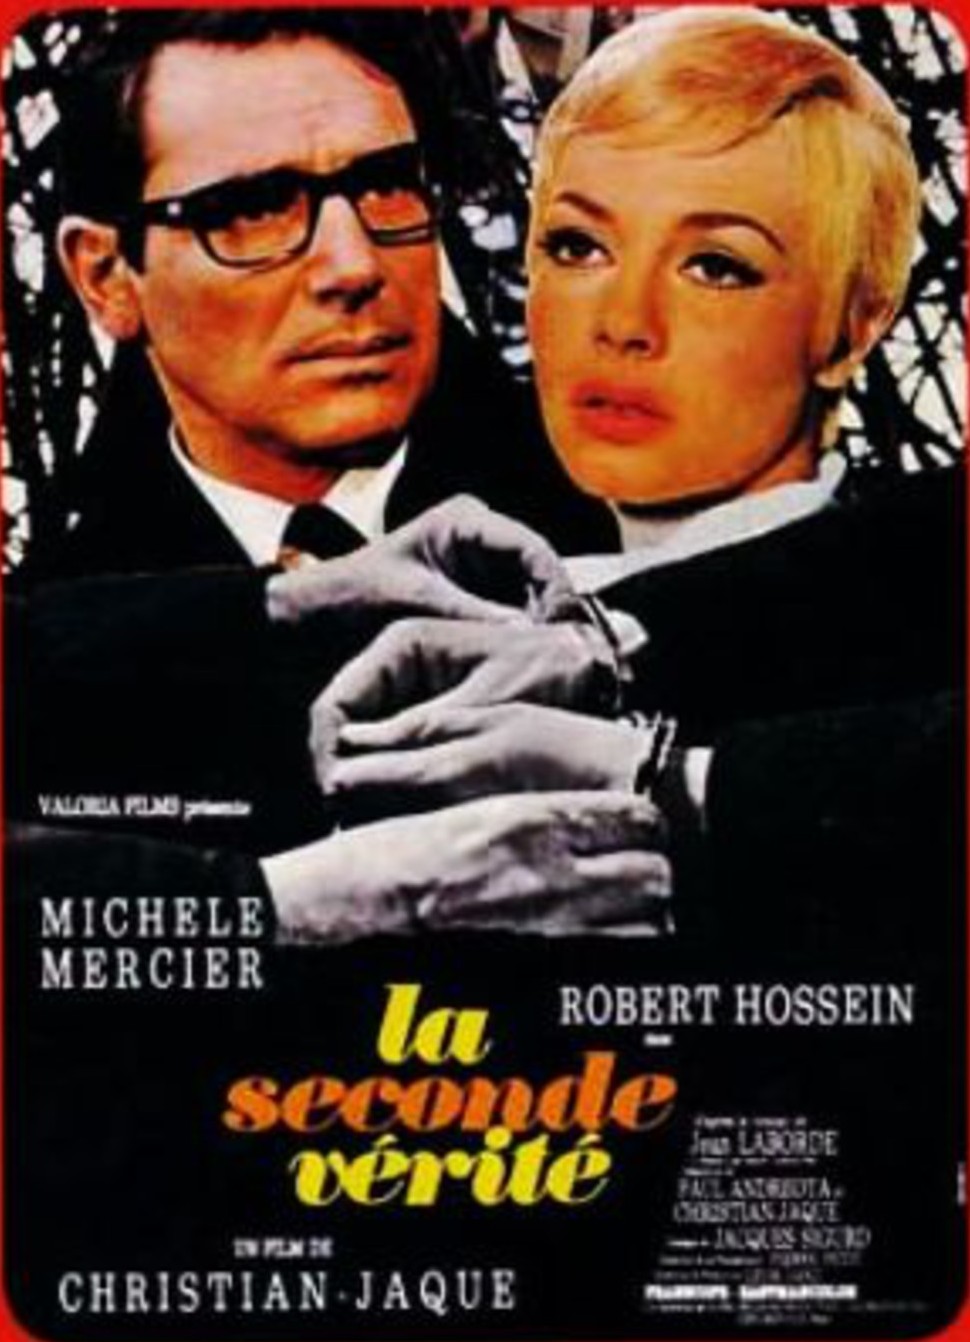 The Second Twin (1966) Screenshot 3 